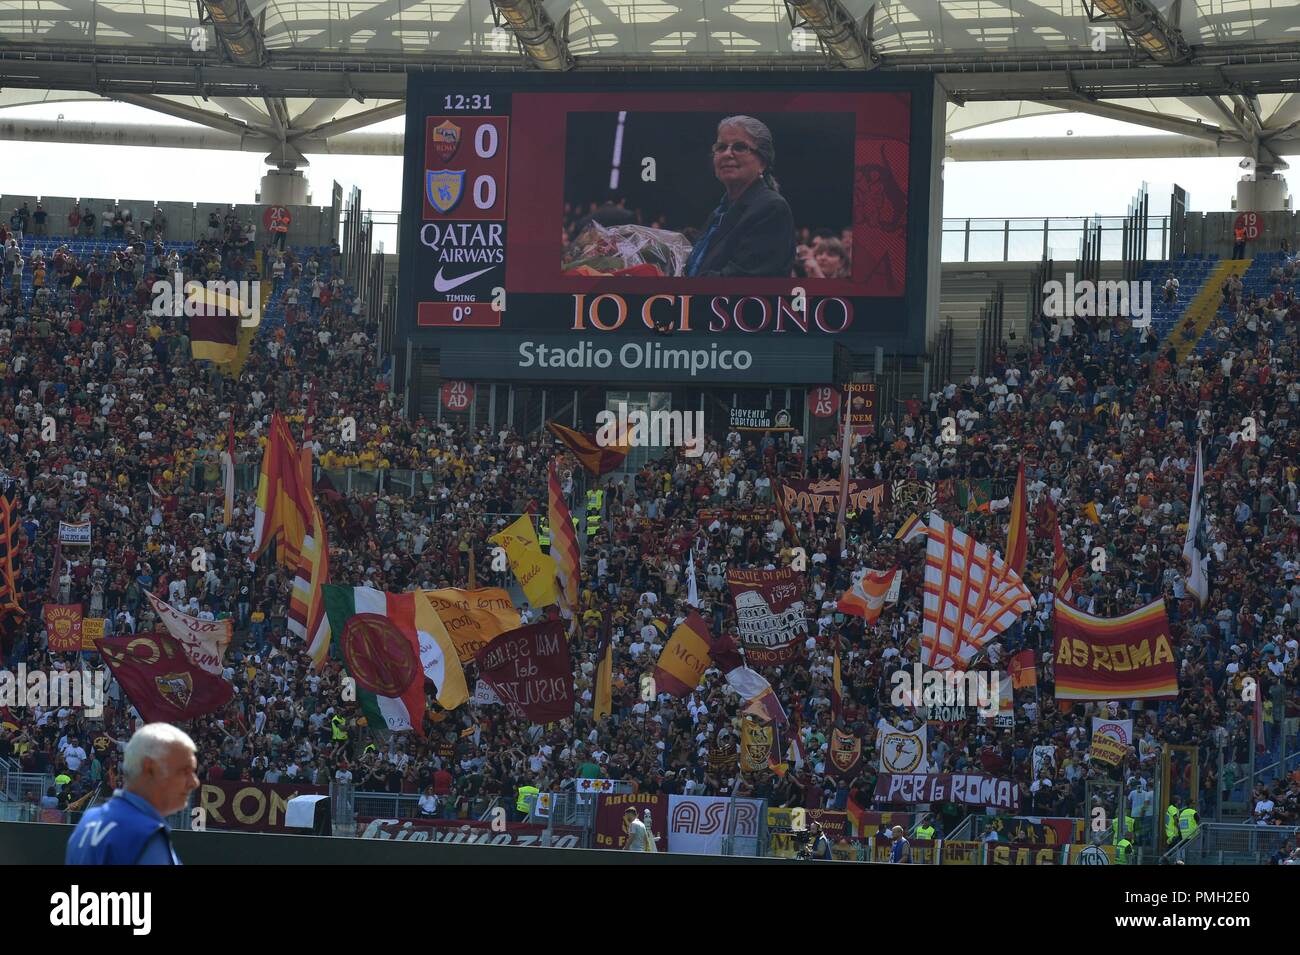 Roma-Chievo Stock Photo